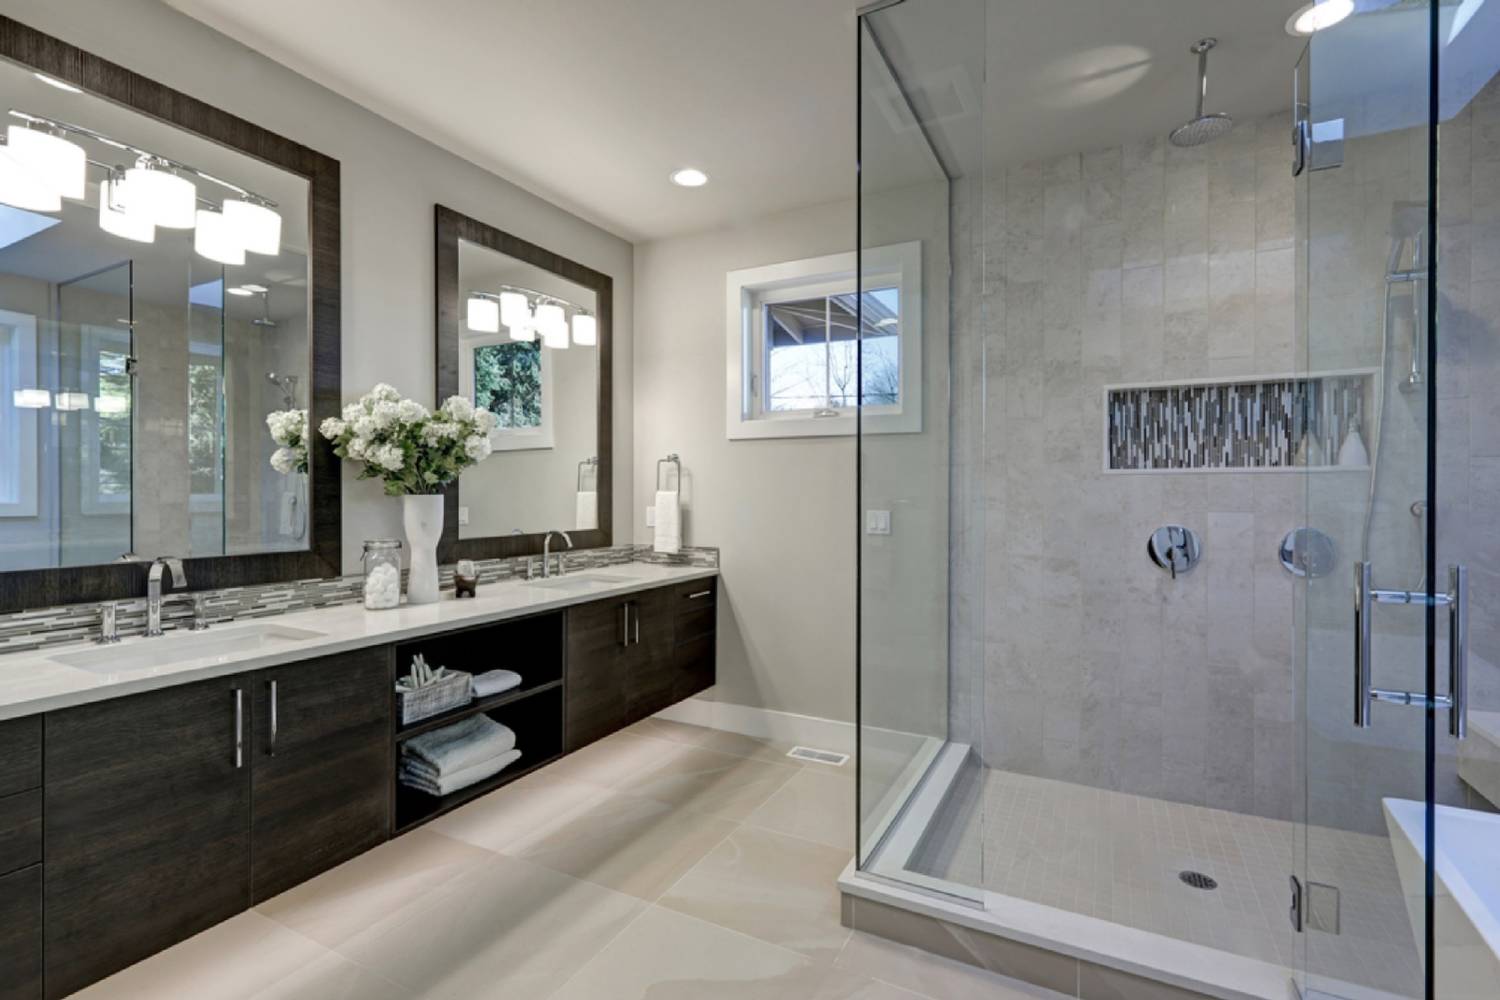 6 Benefits of Installing a Fiberglass Shower in Your Bathroom